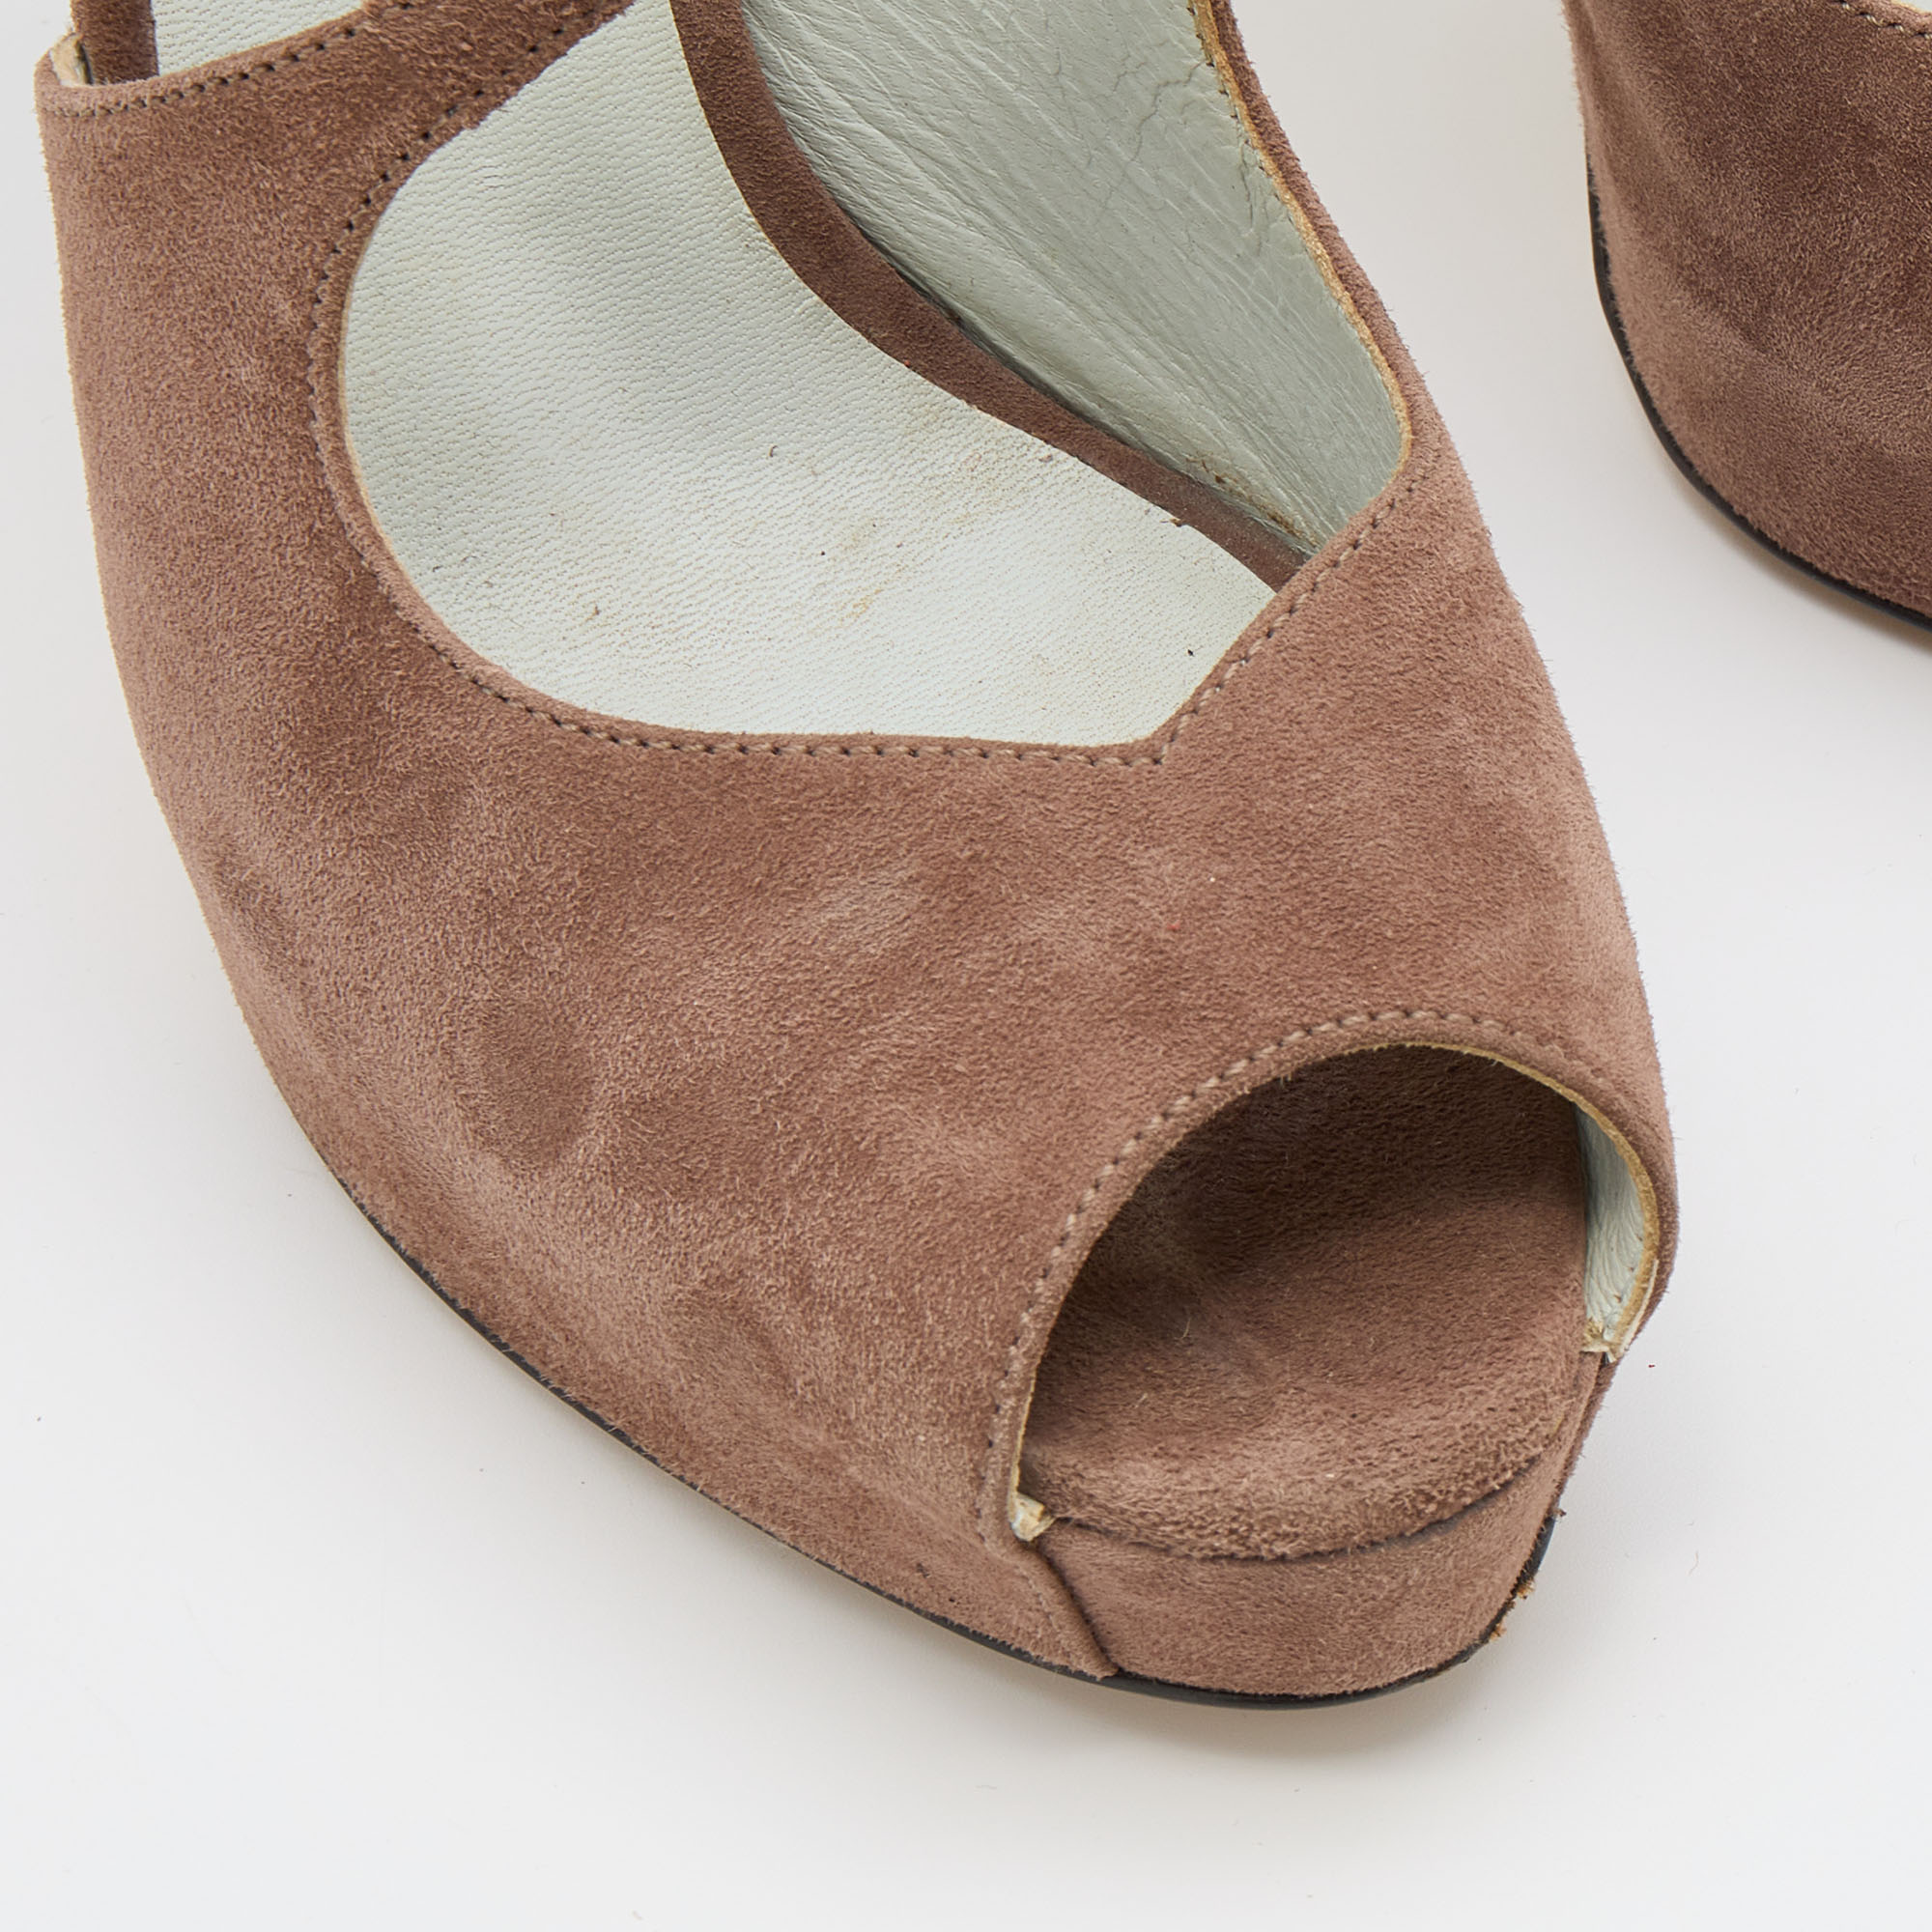 D&G Brown Suede Open Toe Platform Sandals Size 38.5